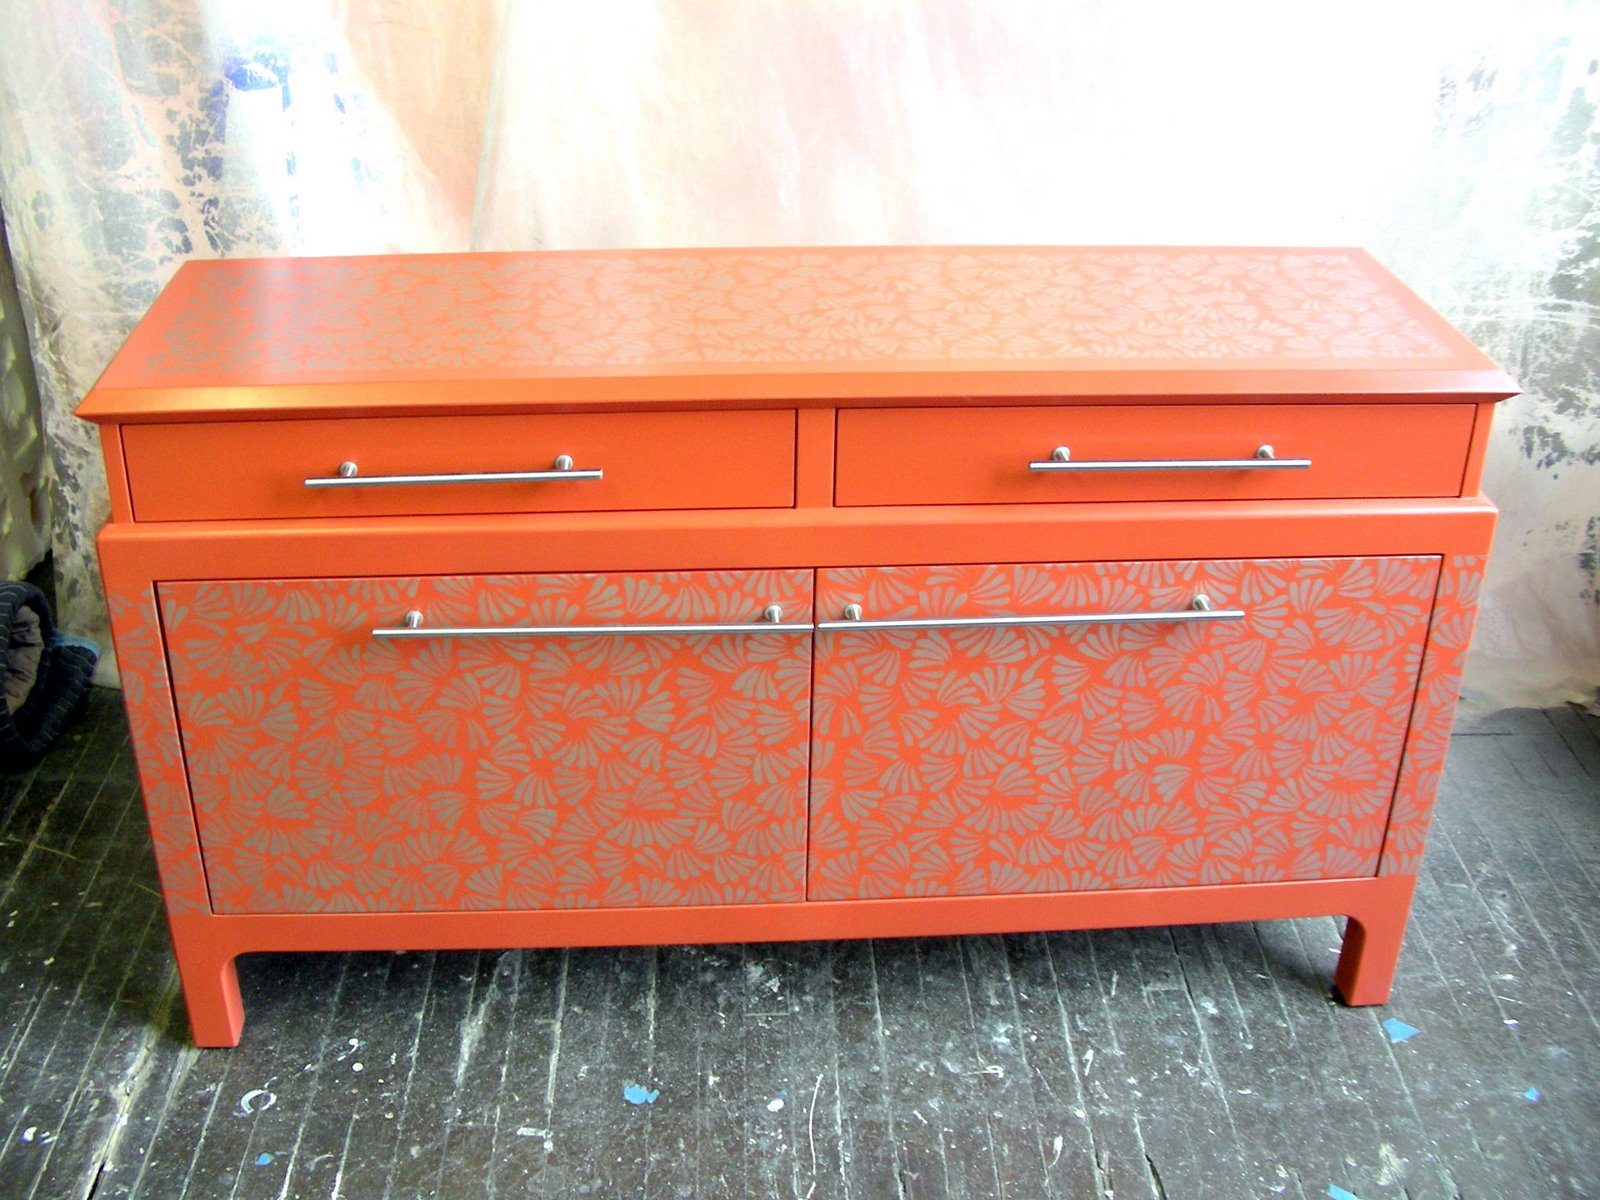 orange painted furniture